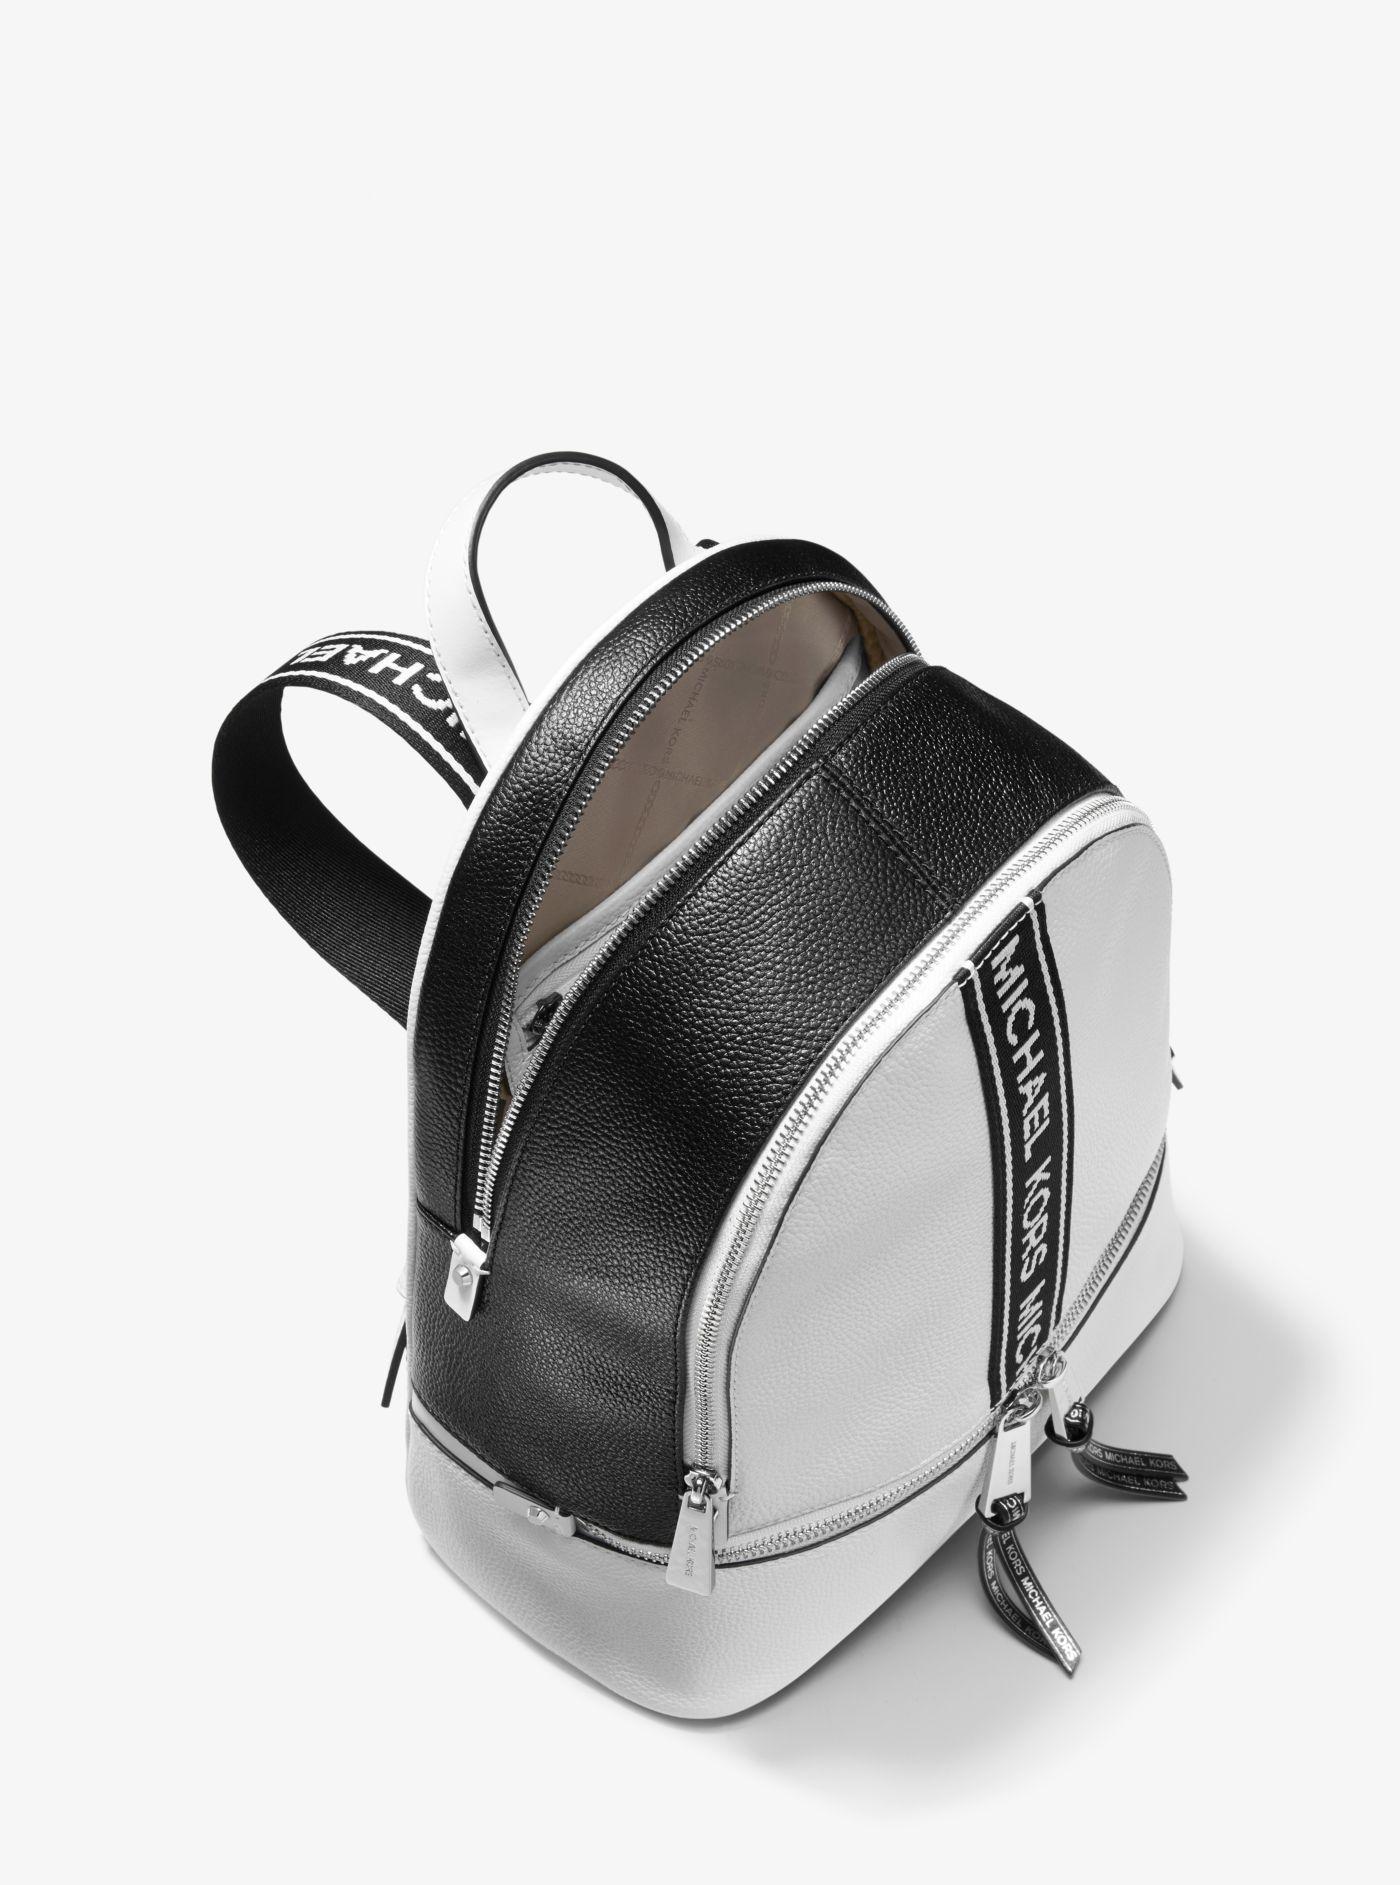 black and white michael kors backpack